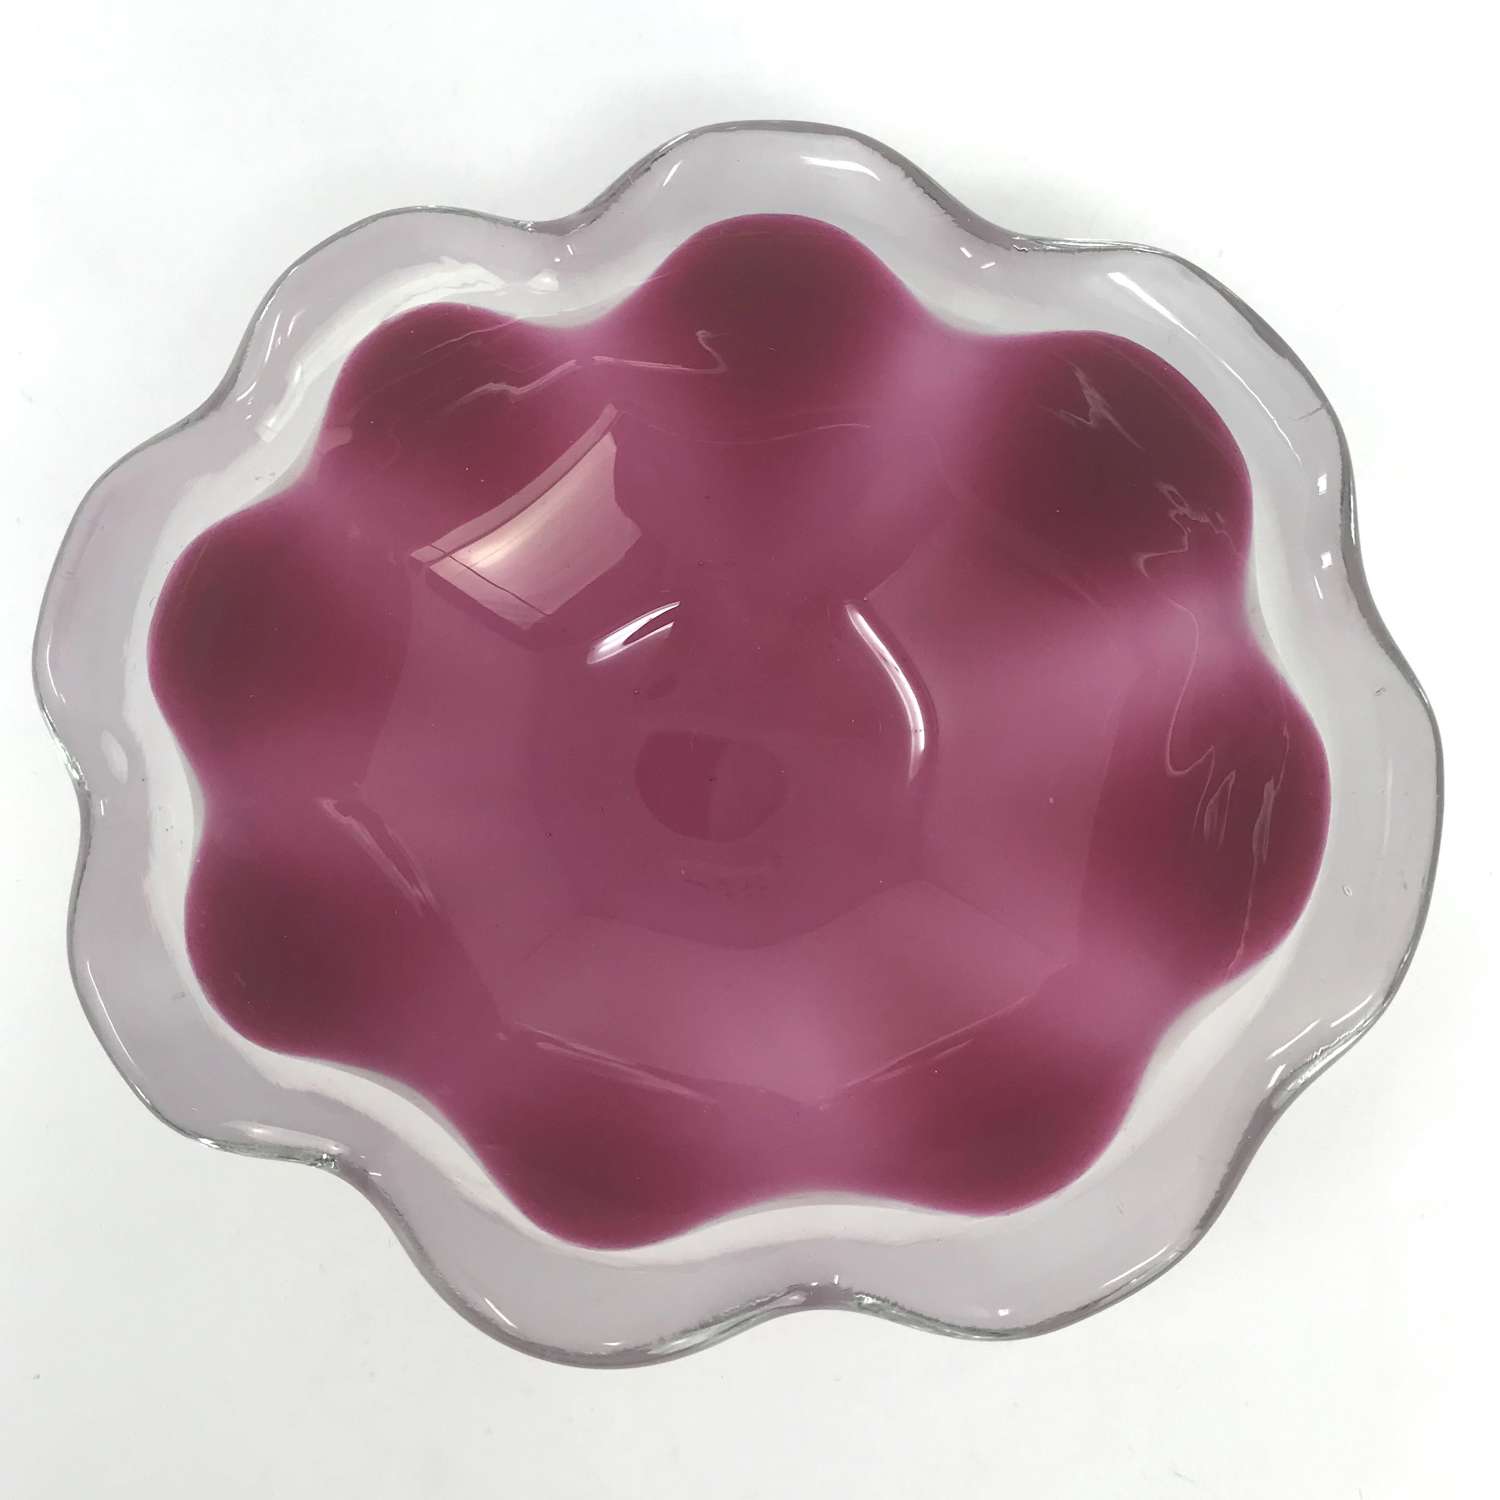 Paul Kedelv pink Coquille bowl, Flygsfors, Sweden 1956